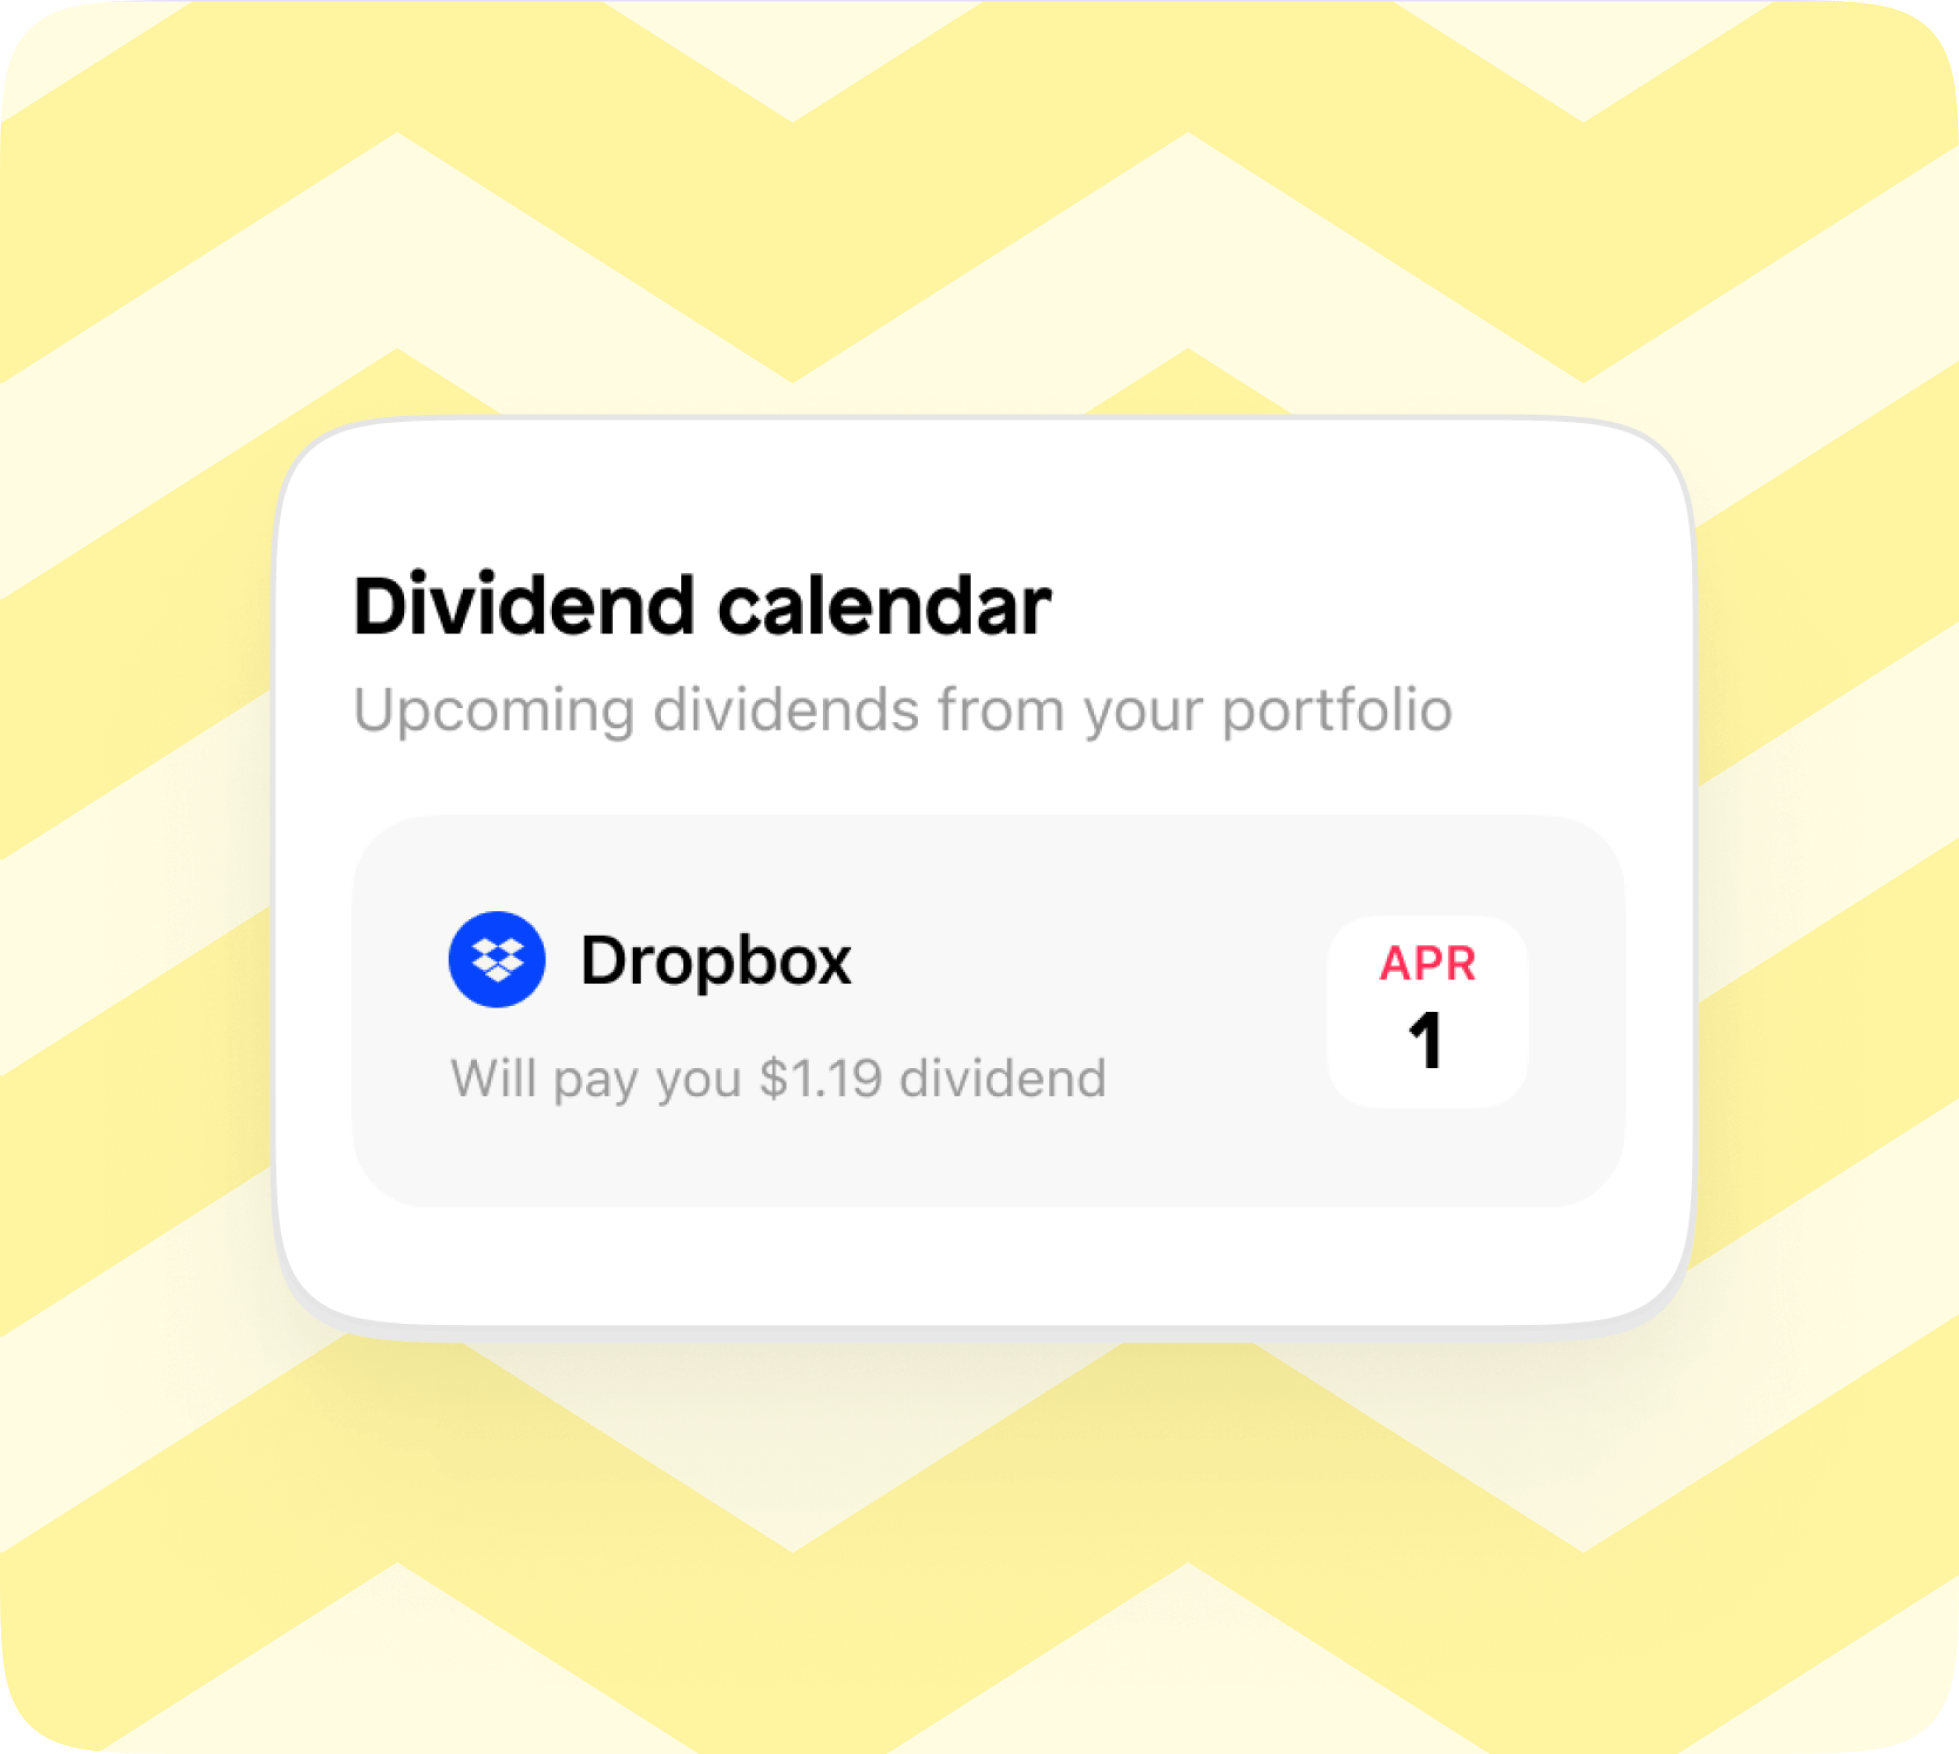 Dividend calendar on the Shares app